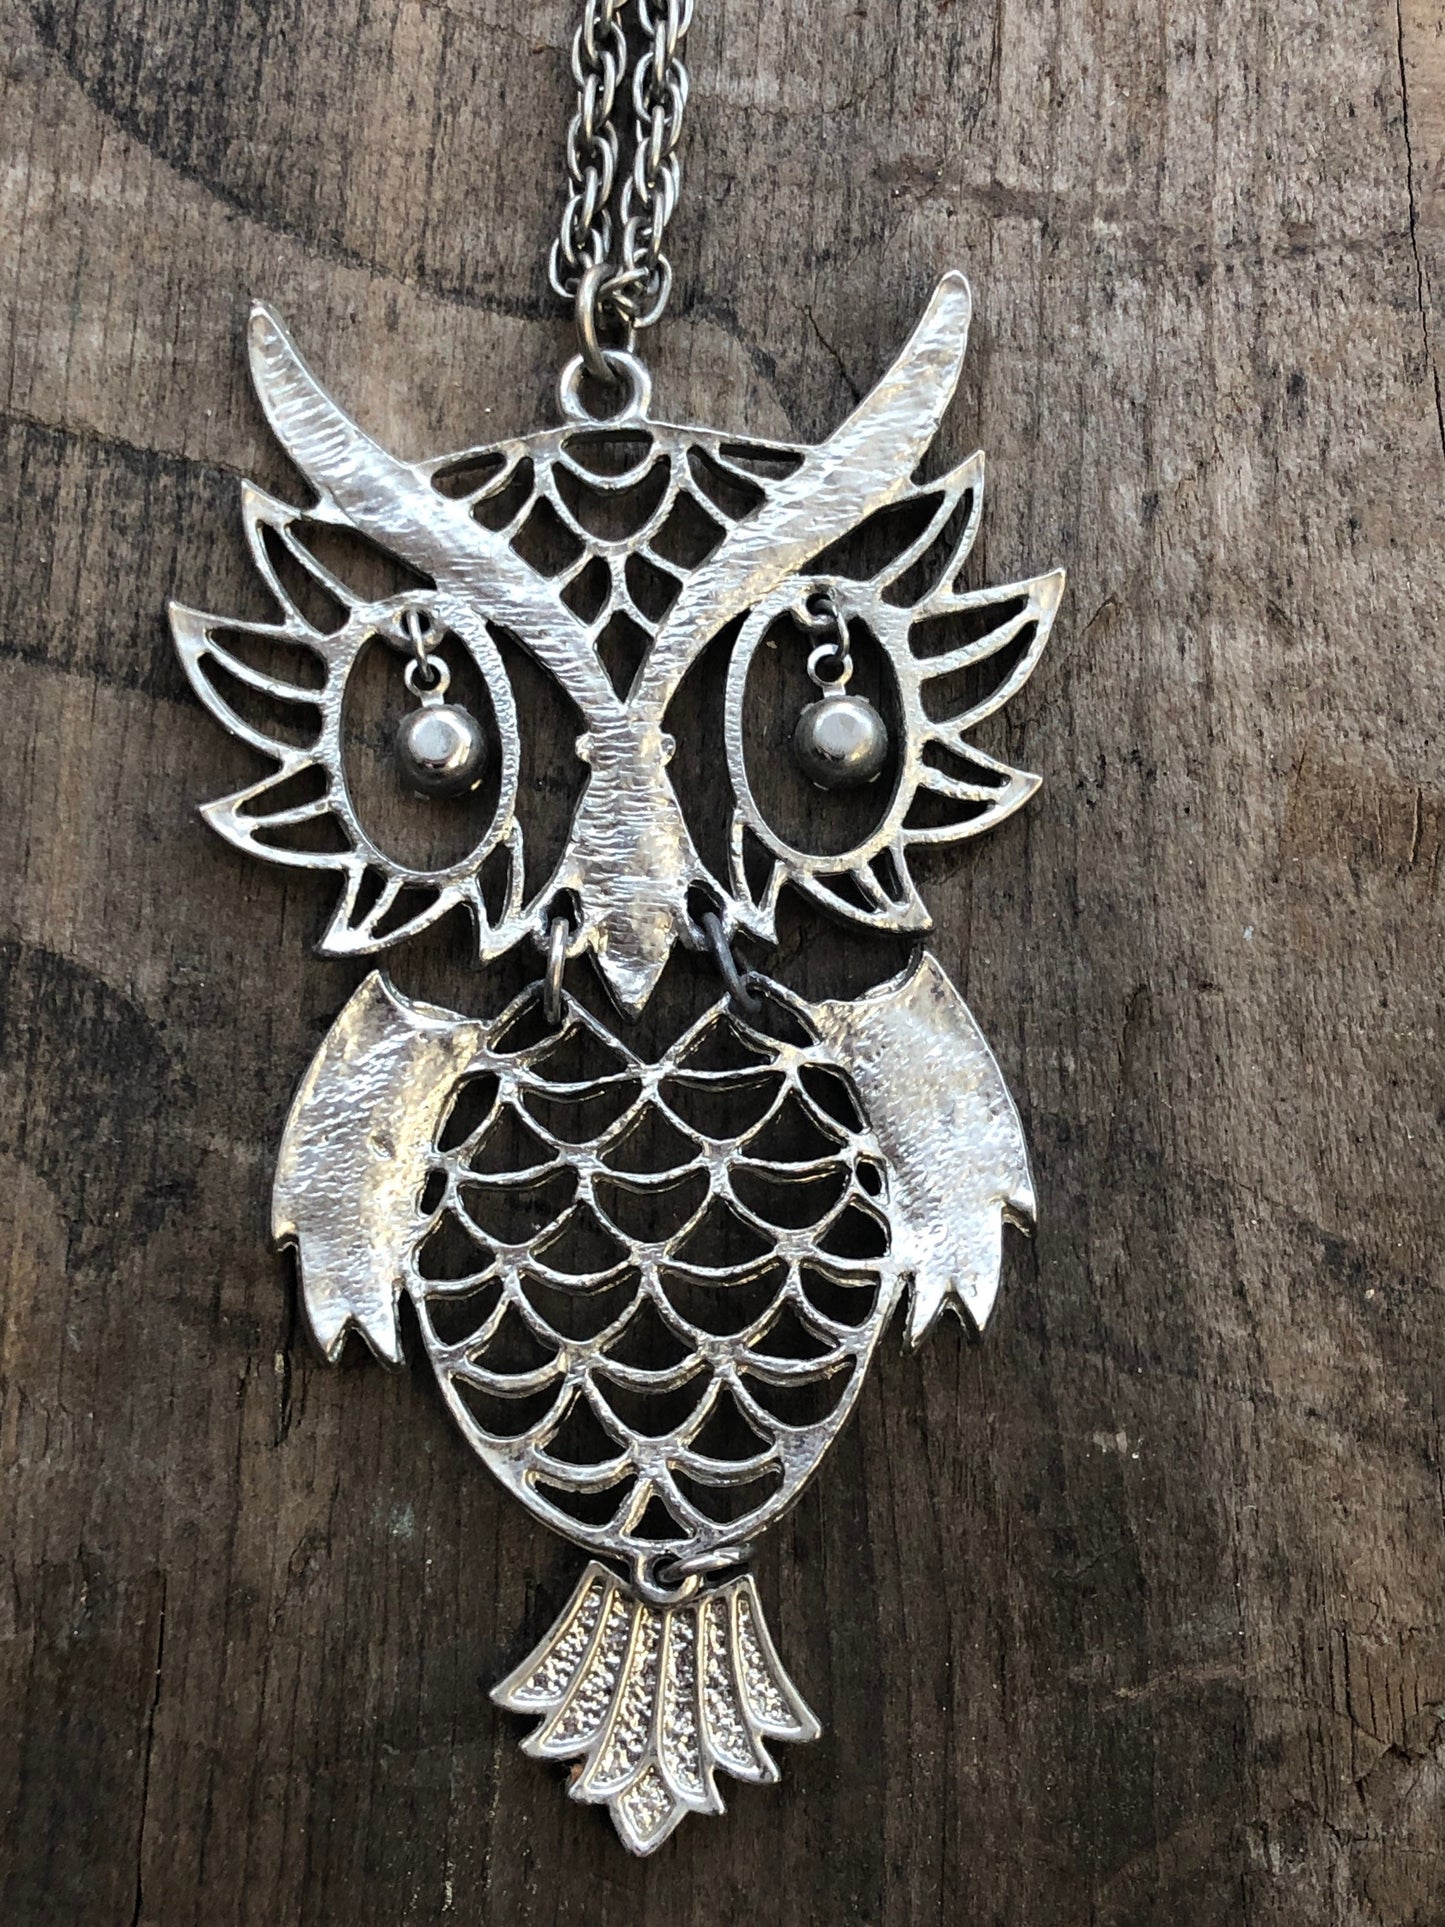 Vintage Silver Crystal Eye Owl Pendant Necklace